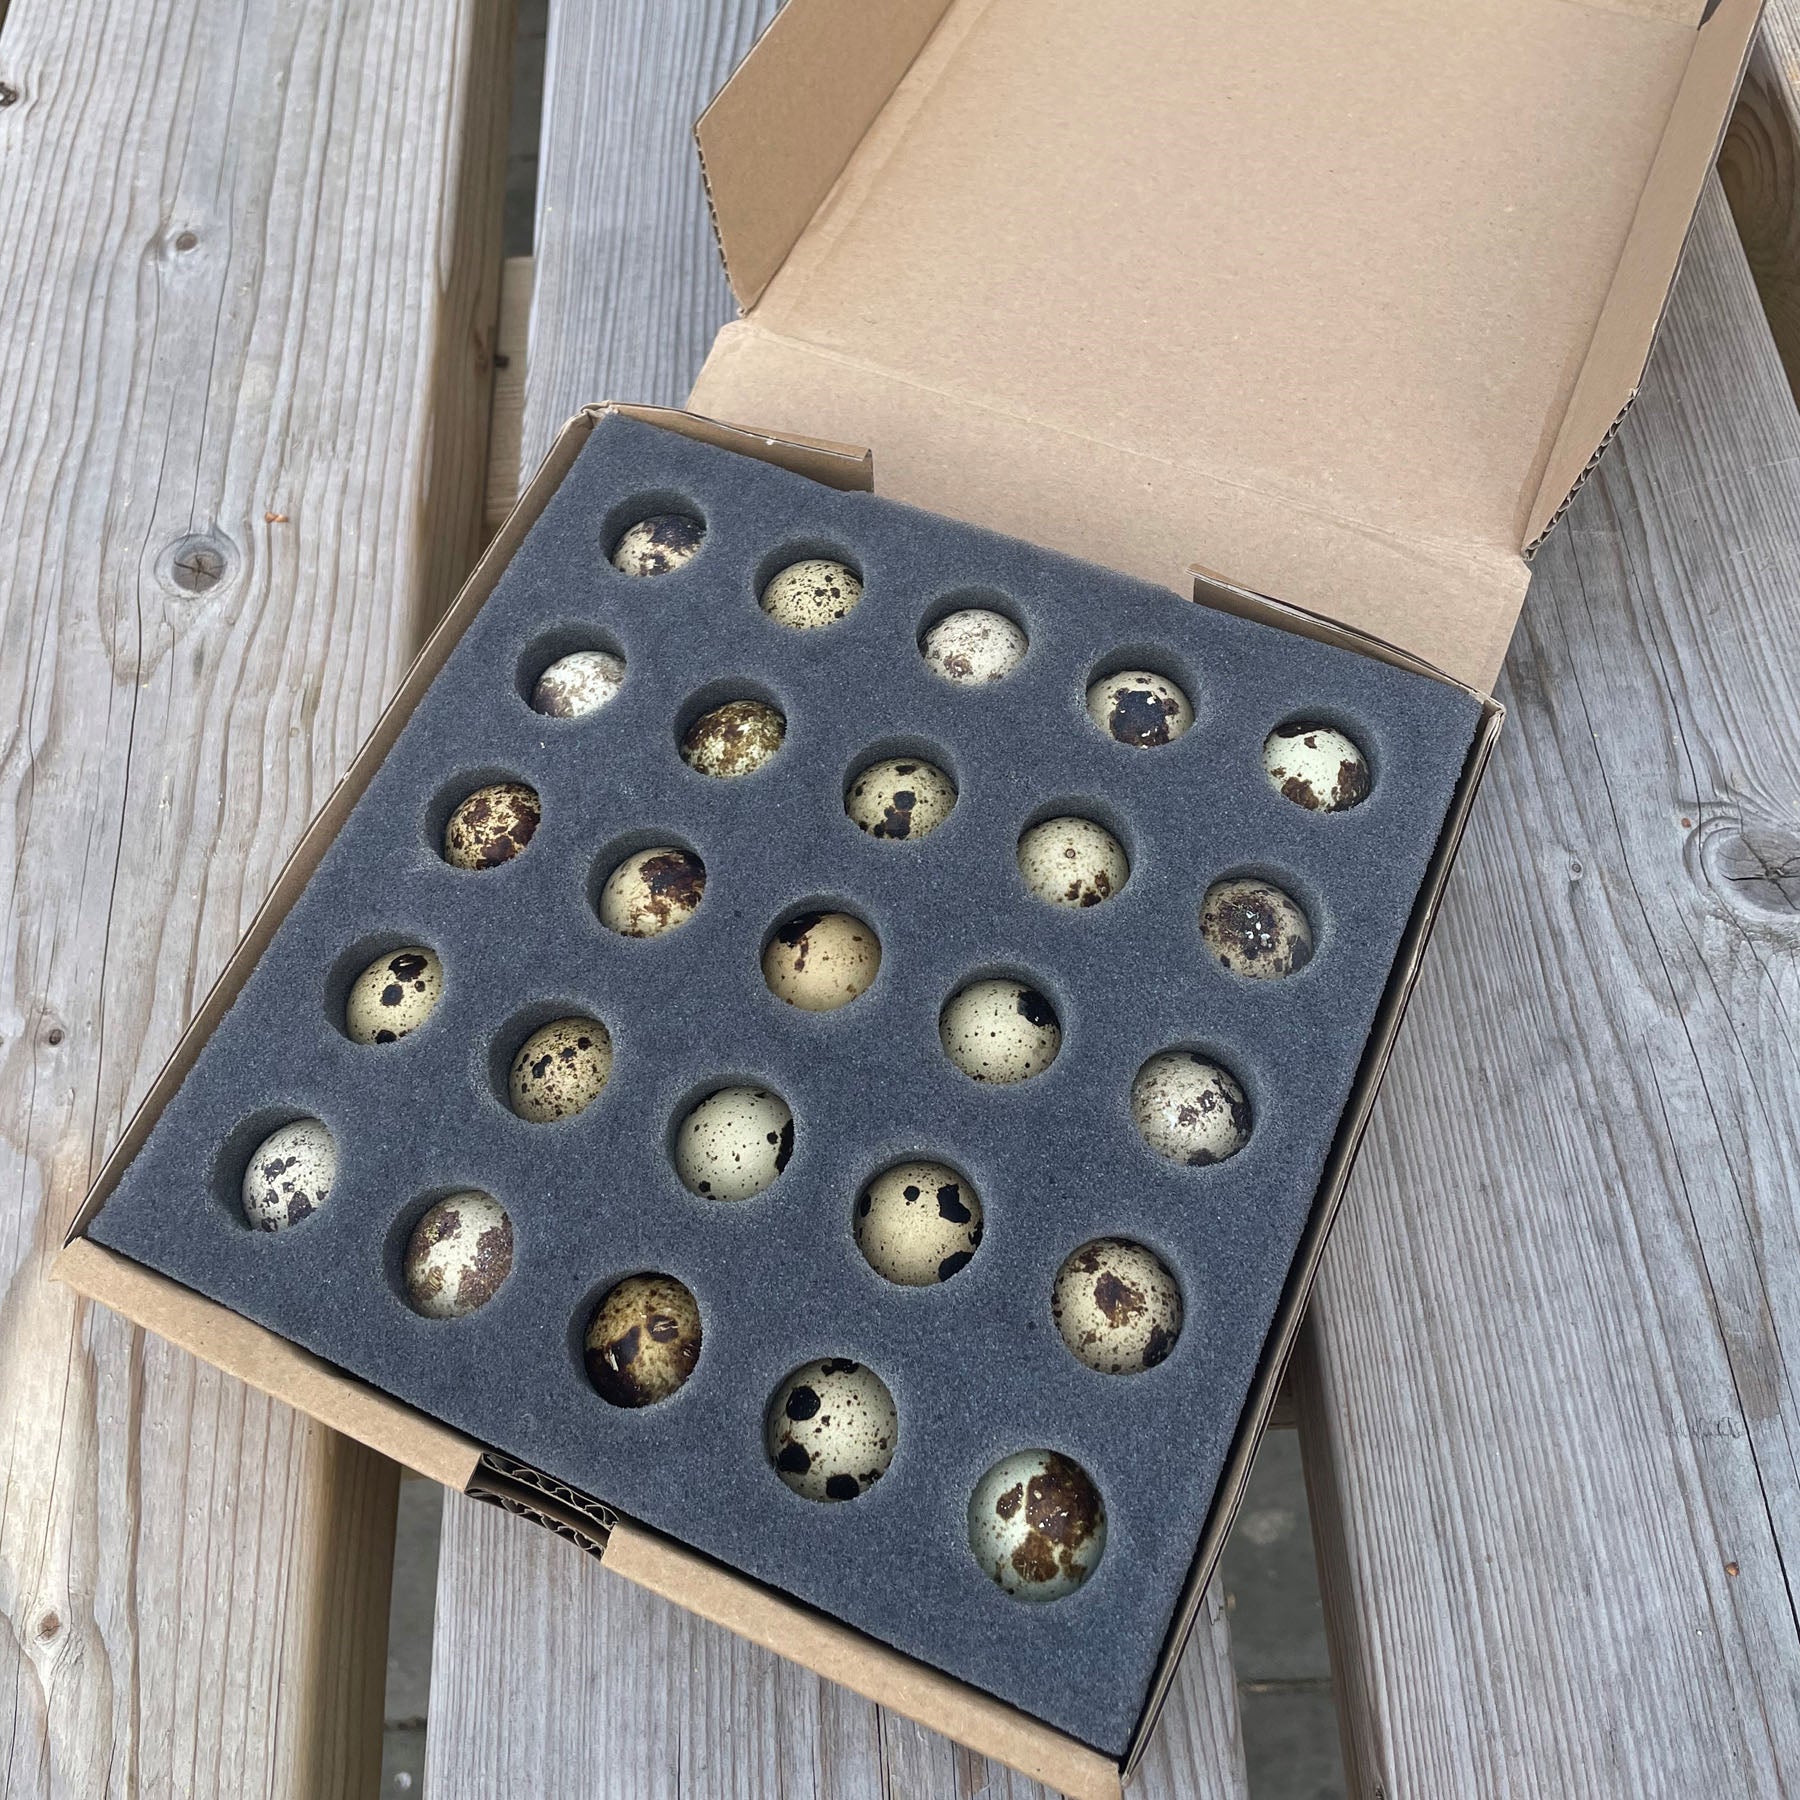 Quail Eggs (for hatching) Box of 25